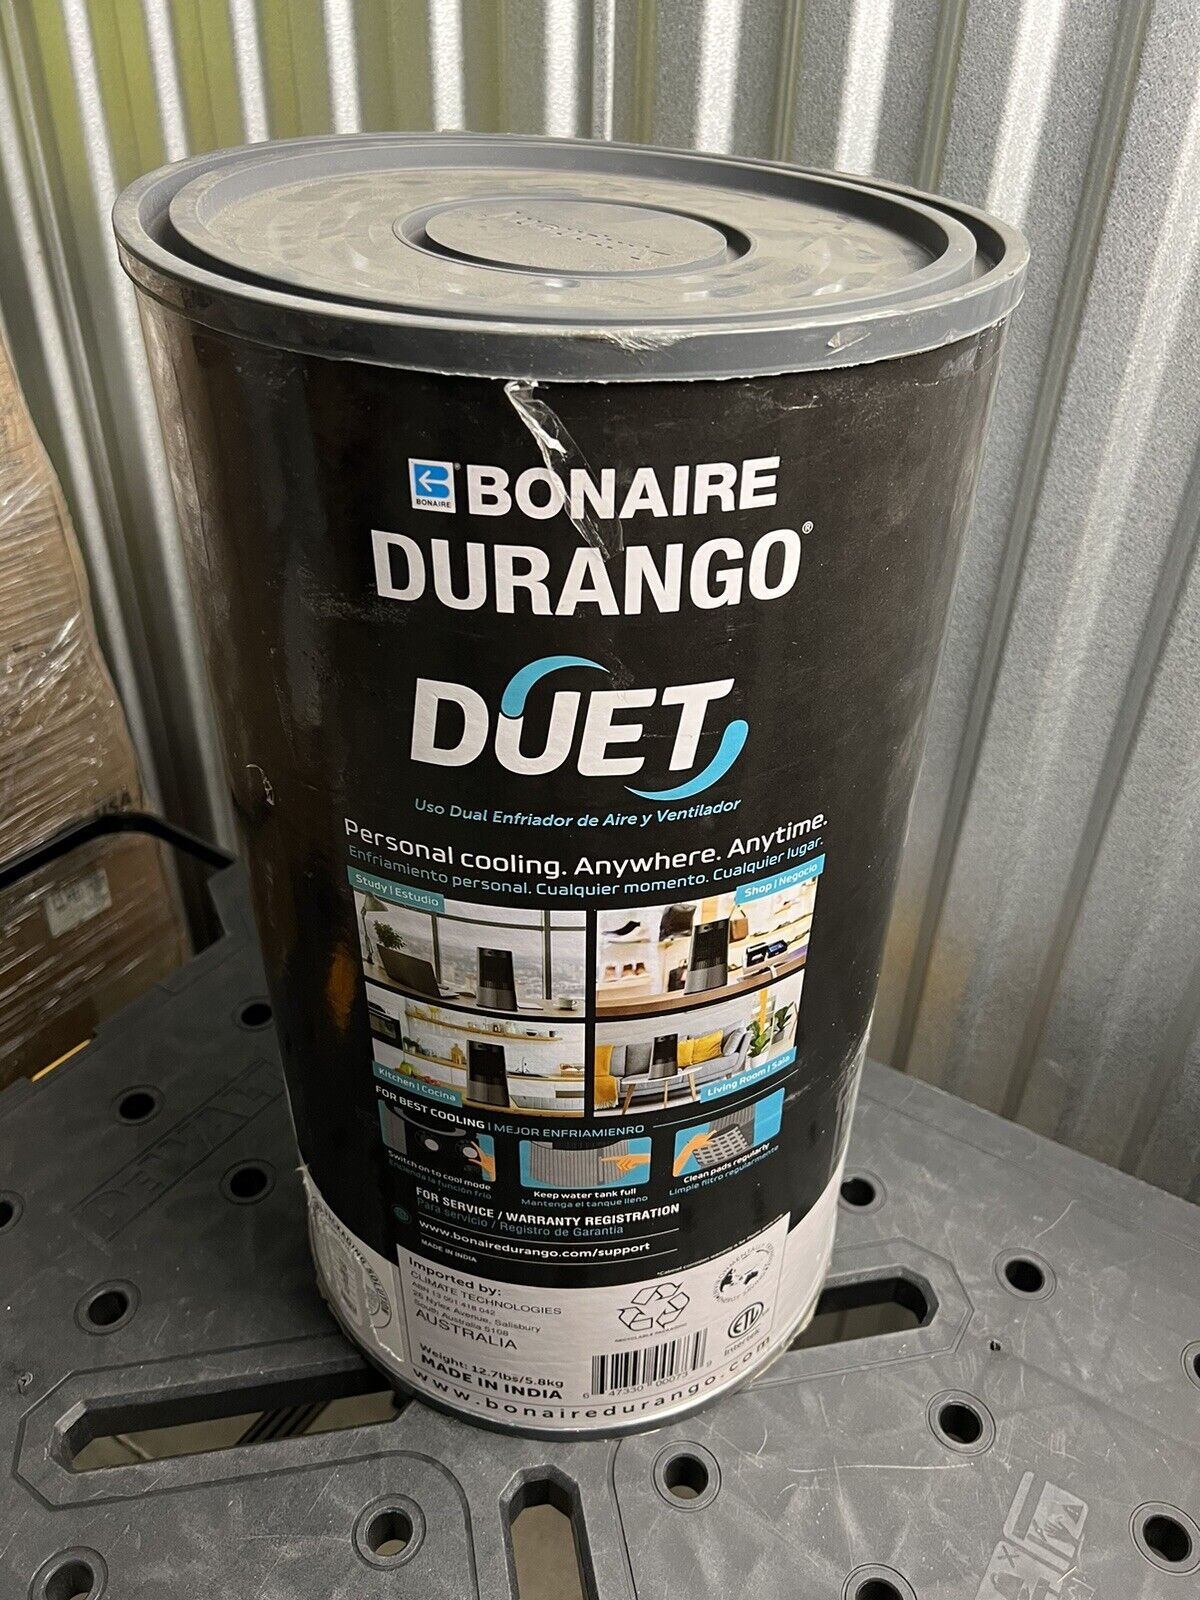 Bonaire Durango Duet 300 CFM 3 Speed Portable Evaporative Cooler for 100 sq. ft.